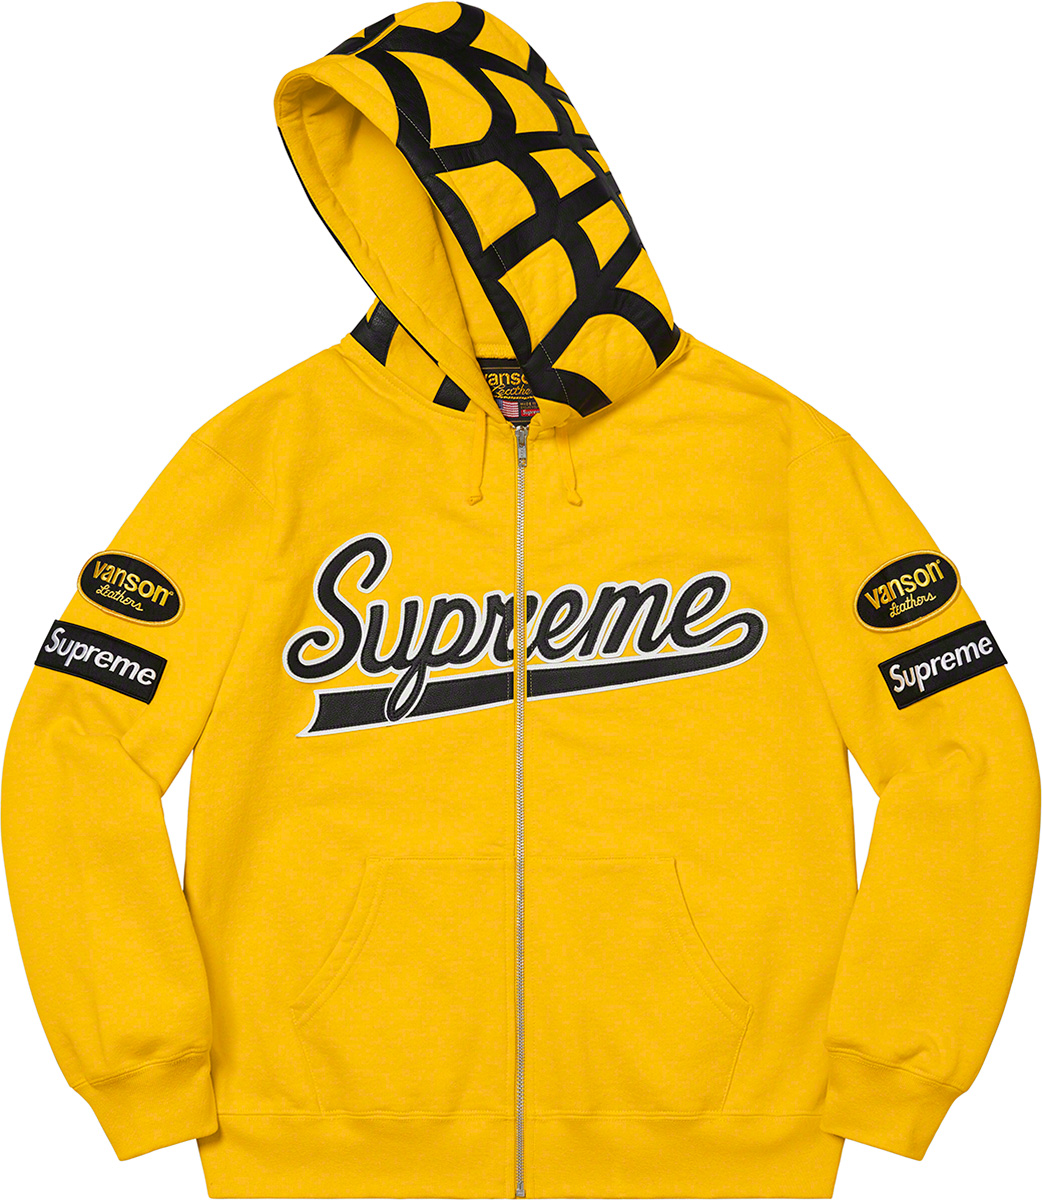 Supreme®/Vanson Leathers® Spider Web Zip Up Hooded Sweatshirt 